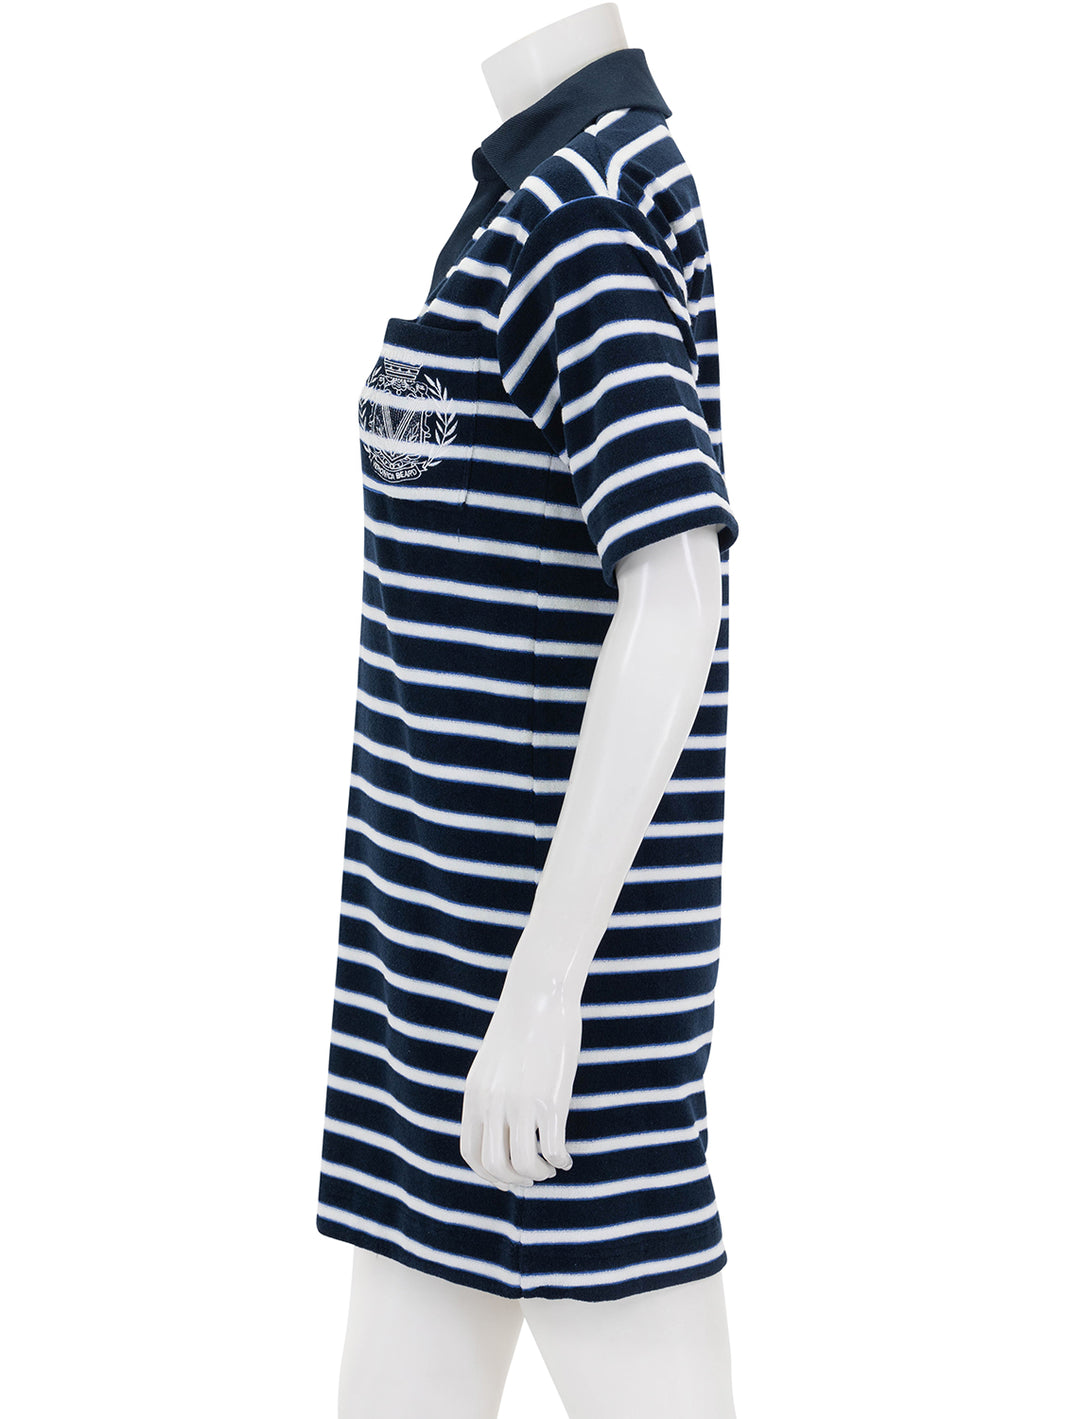 Side view of Veronica Beard's terrence dress in marine stripe.